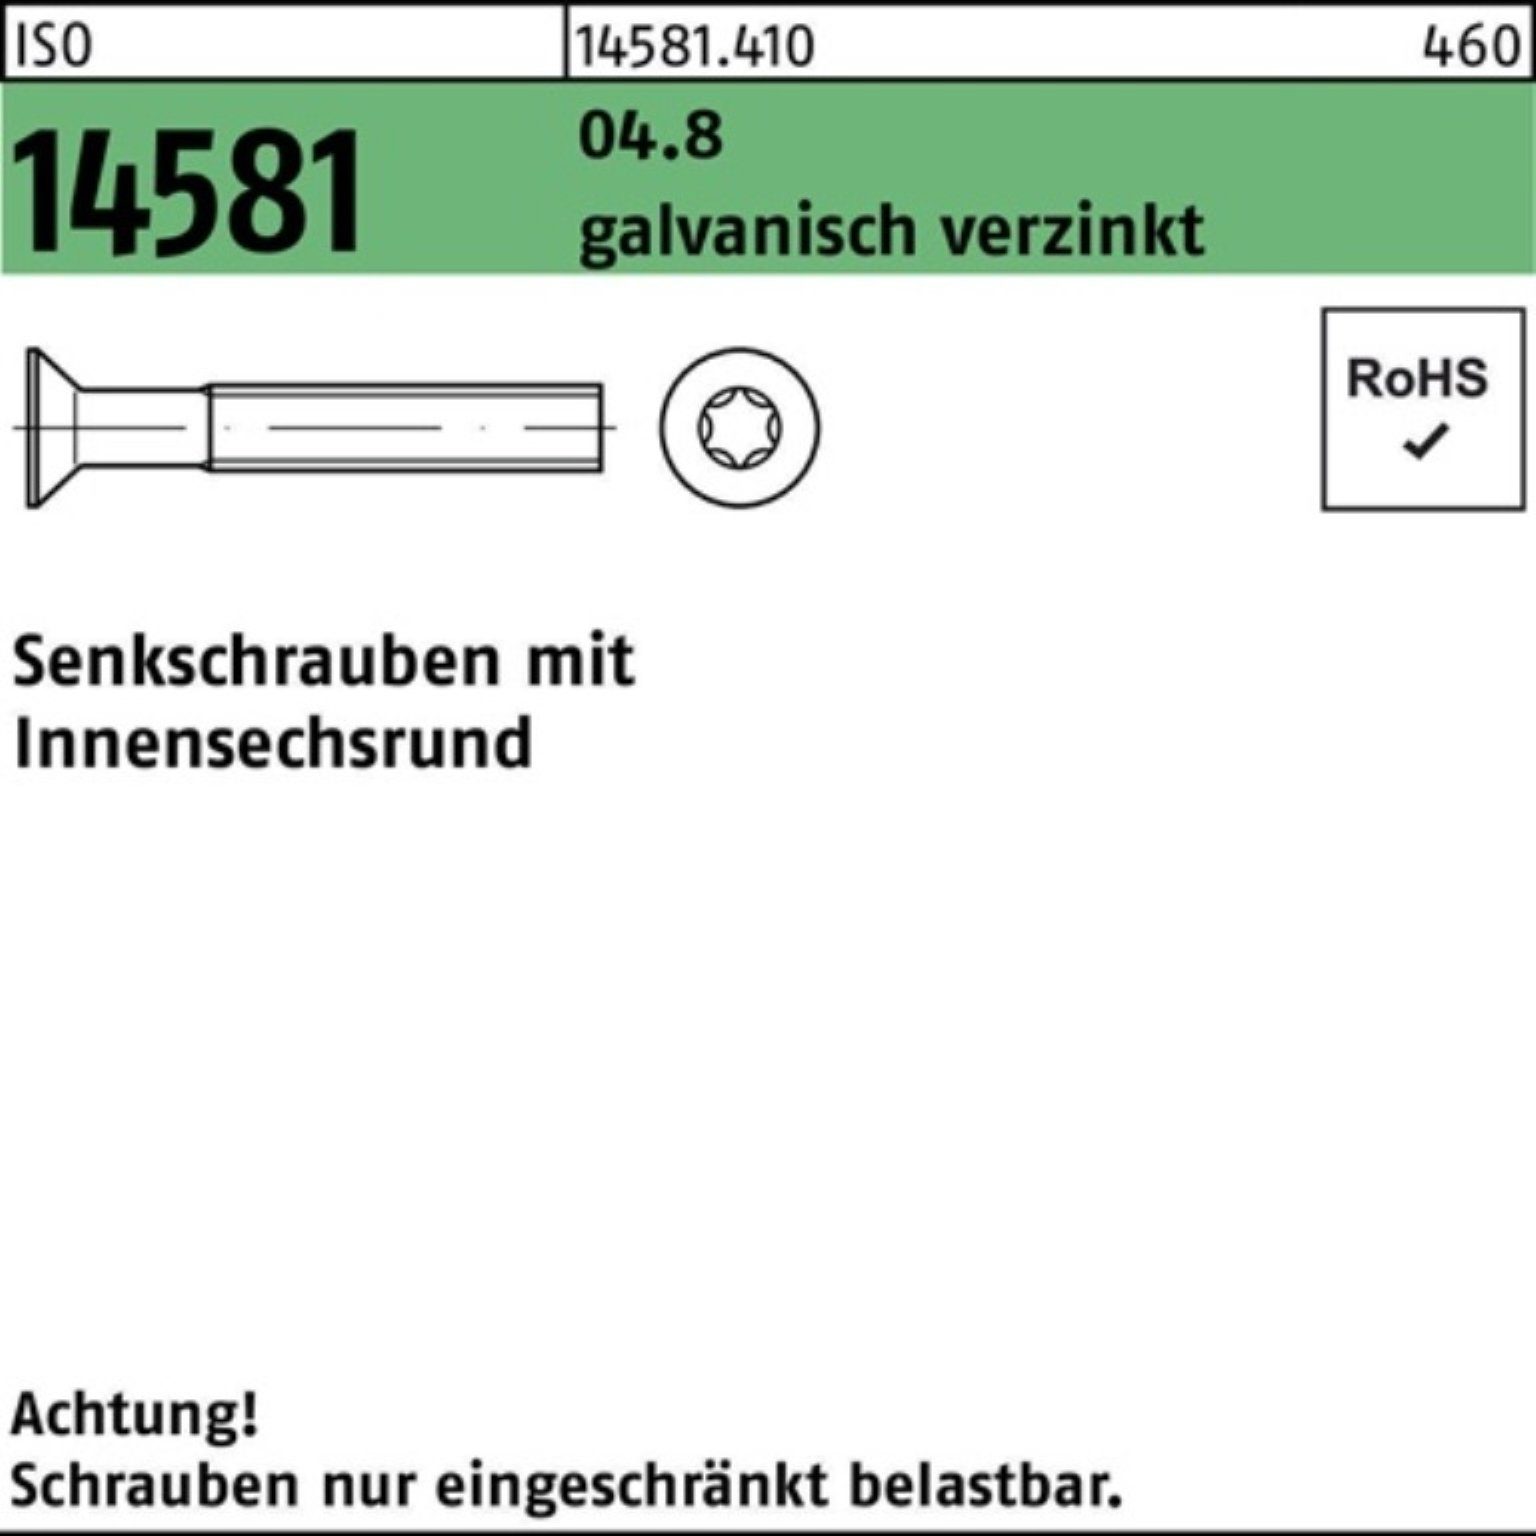 Senkschraube 1000er Senkschraube 1000S galv.verz. T25 14581 ISO 04.8 Reyher M5x20 ISR Pack